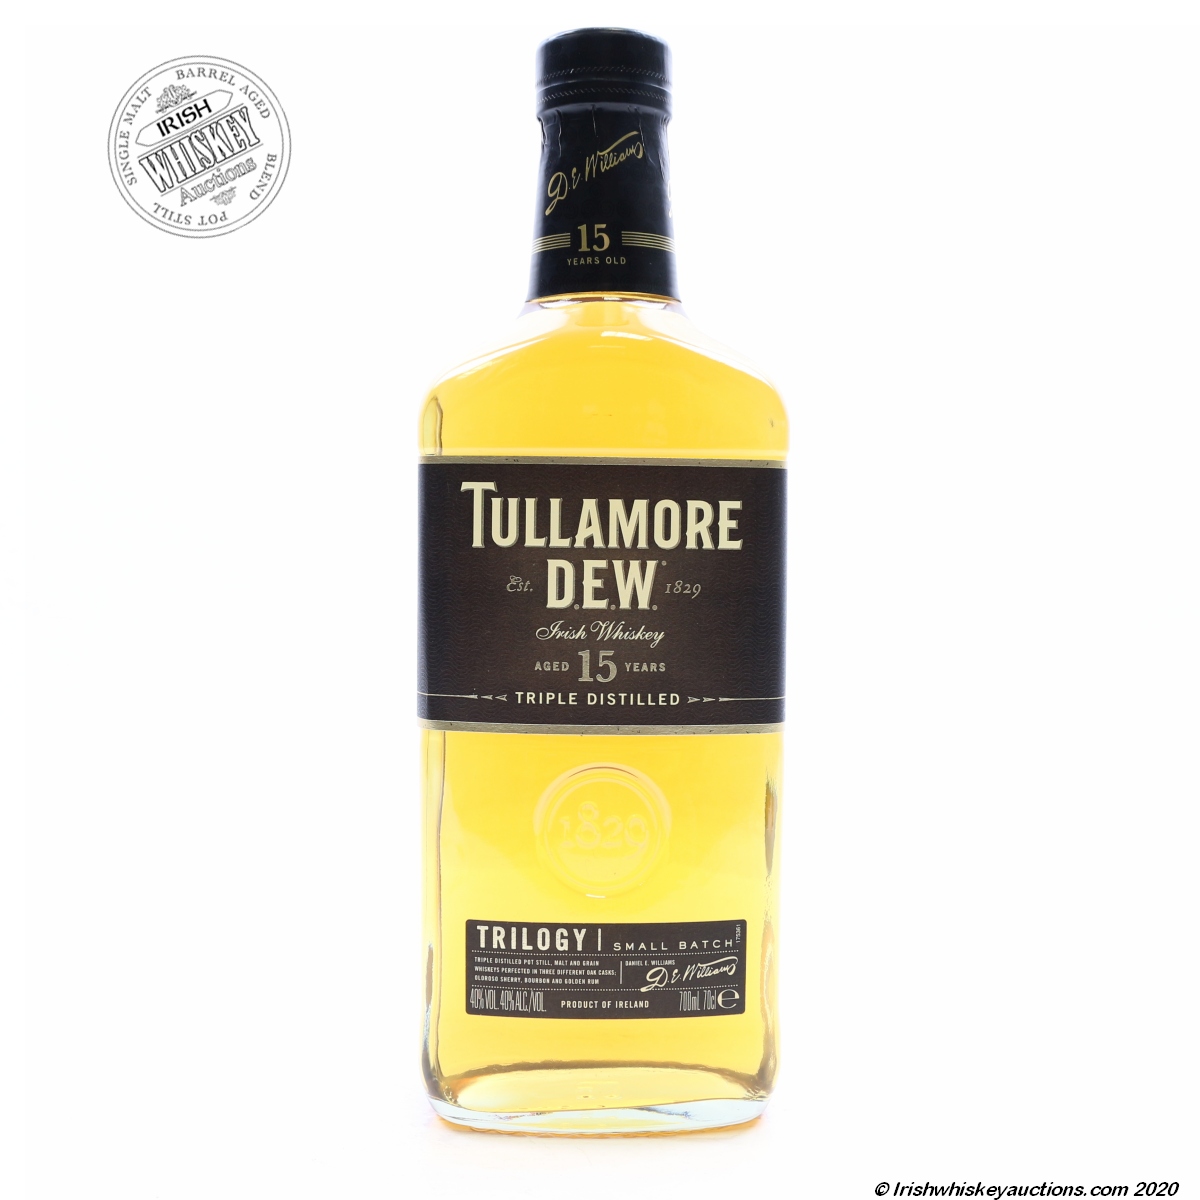 Irish Whiskey Auctions | Tullamore Year old DEW Trilogy 15